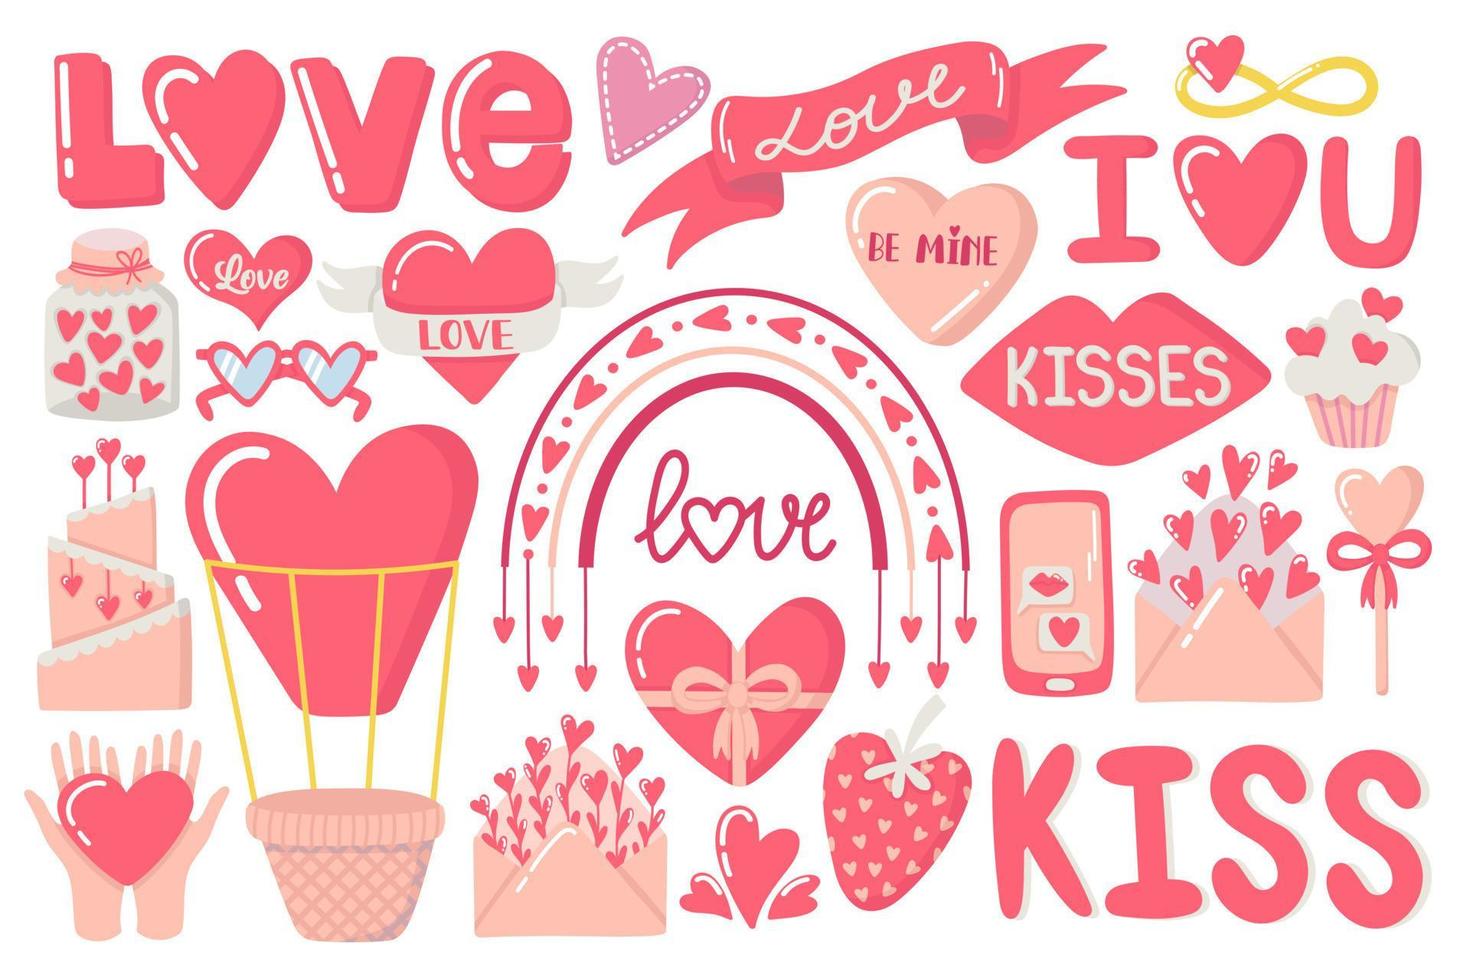 Cute valentine's day doodles set vector